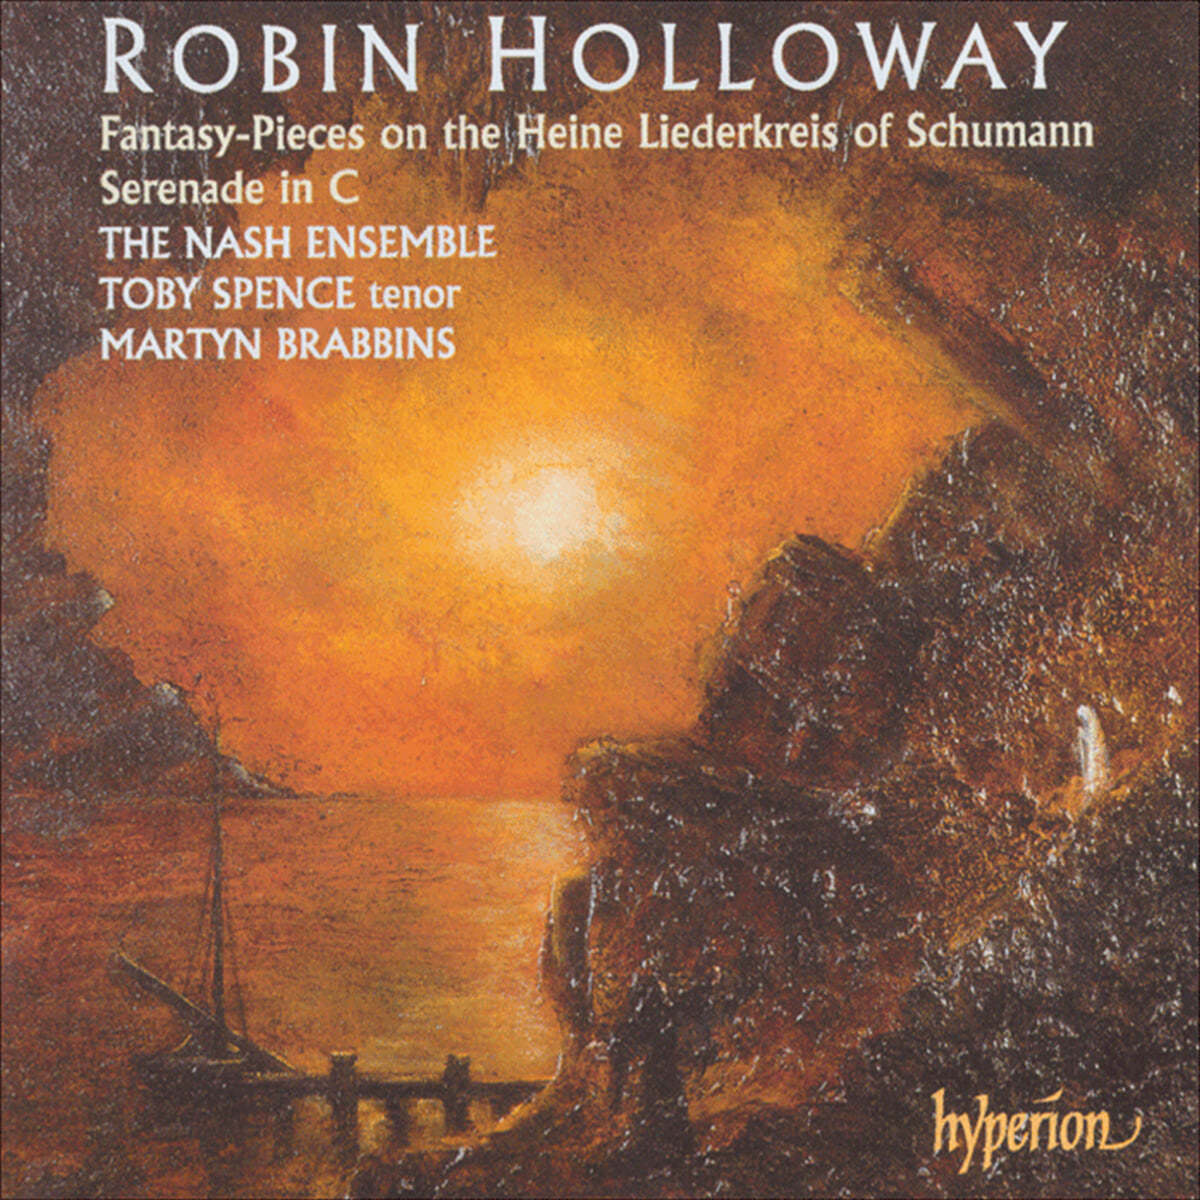 Nash Ensemble 로빈 홀로웨이: 세레나데 / 슈만: 리더크라이스 (Robin Holloway: Serenade / Schumann: Liederkreis)